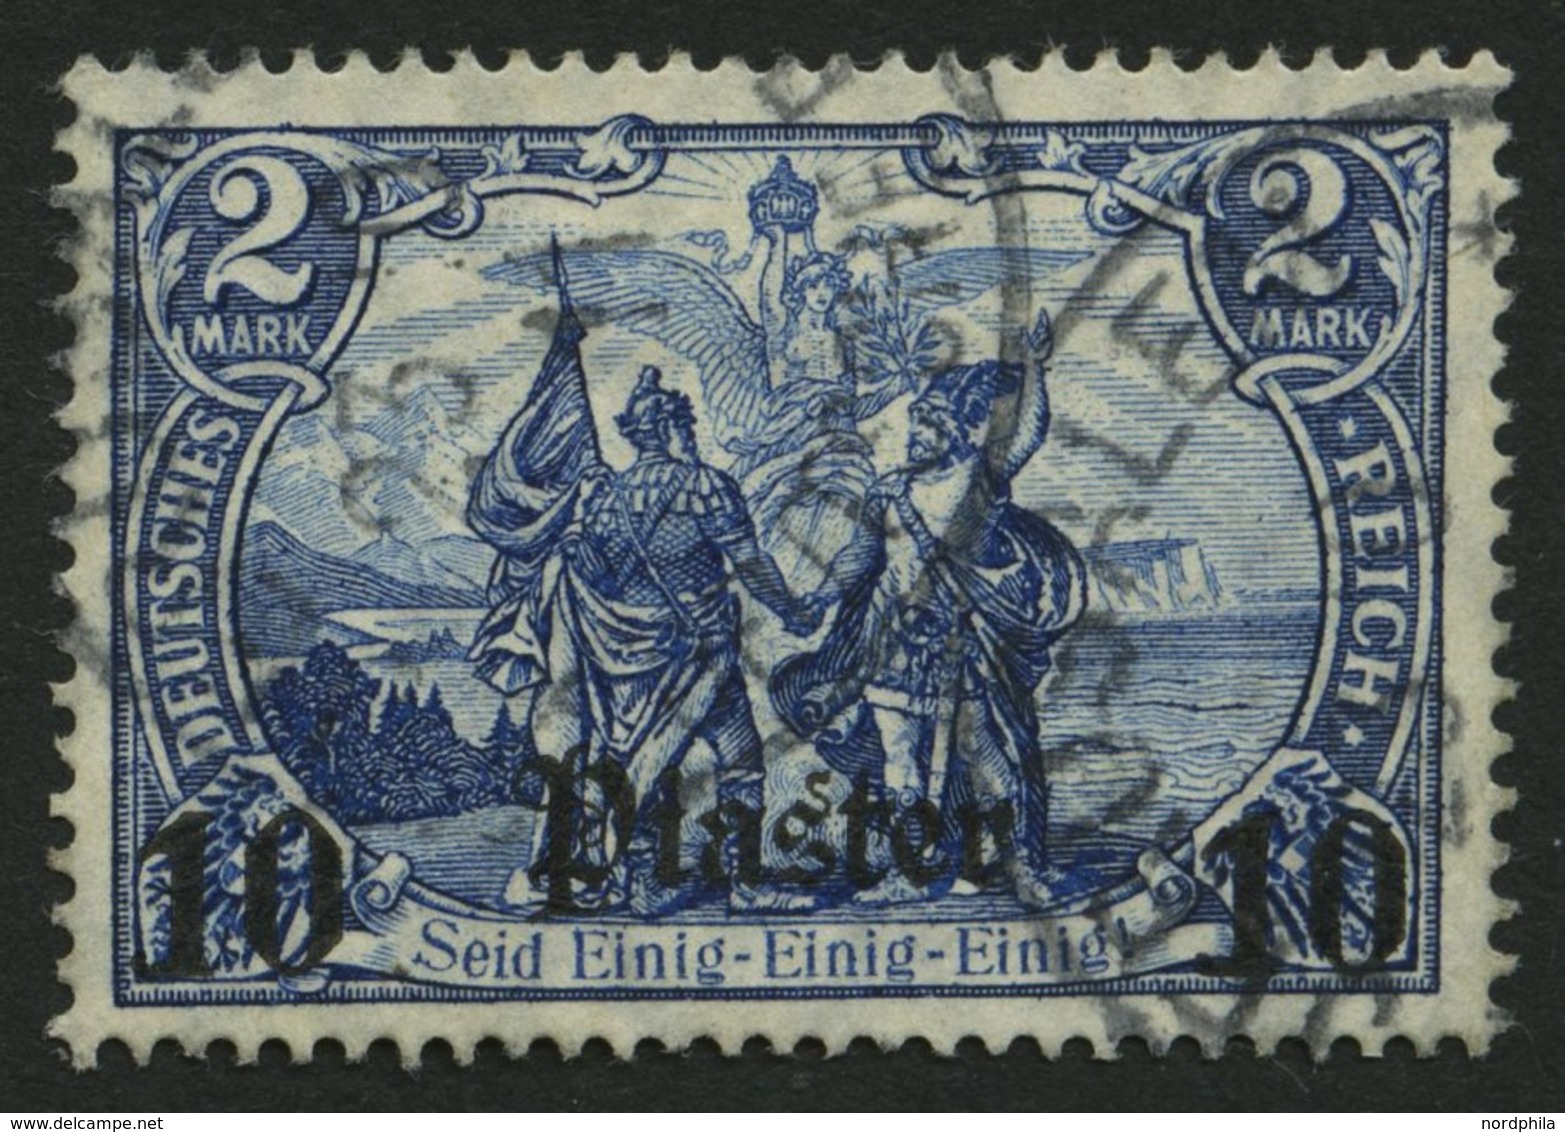 DP TÜRKEI 45 O, 1906, 10 Pia. Auf 2 M., Mit Wz., Pracht, Mi. 60.- - Turquie (bureaux)